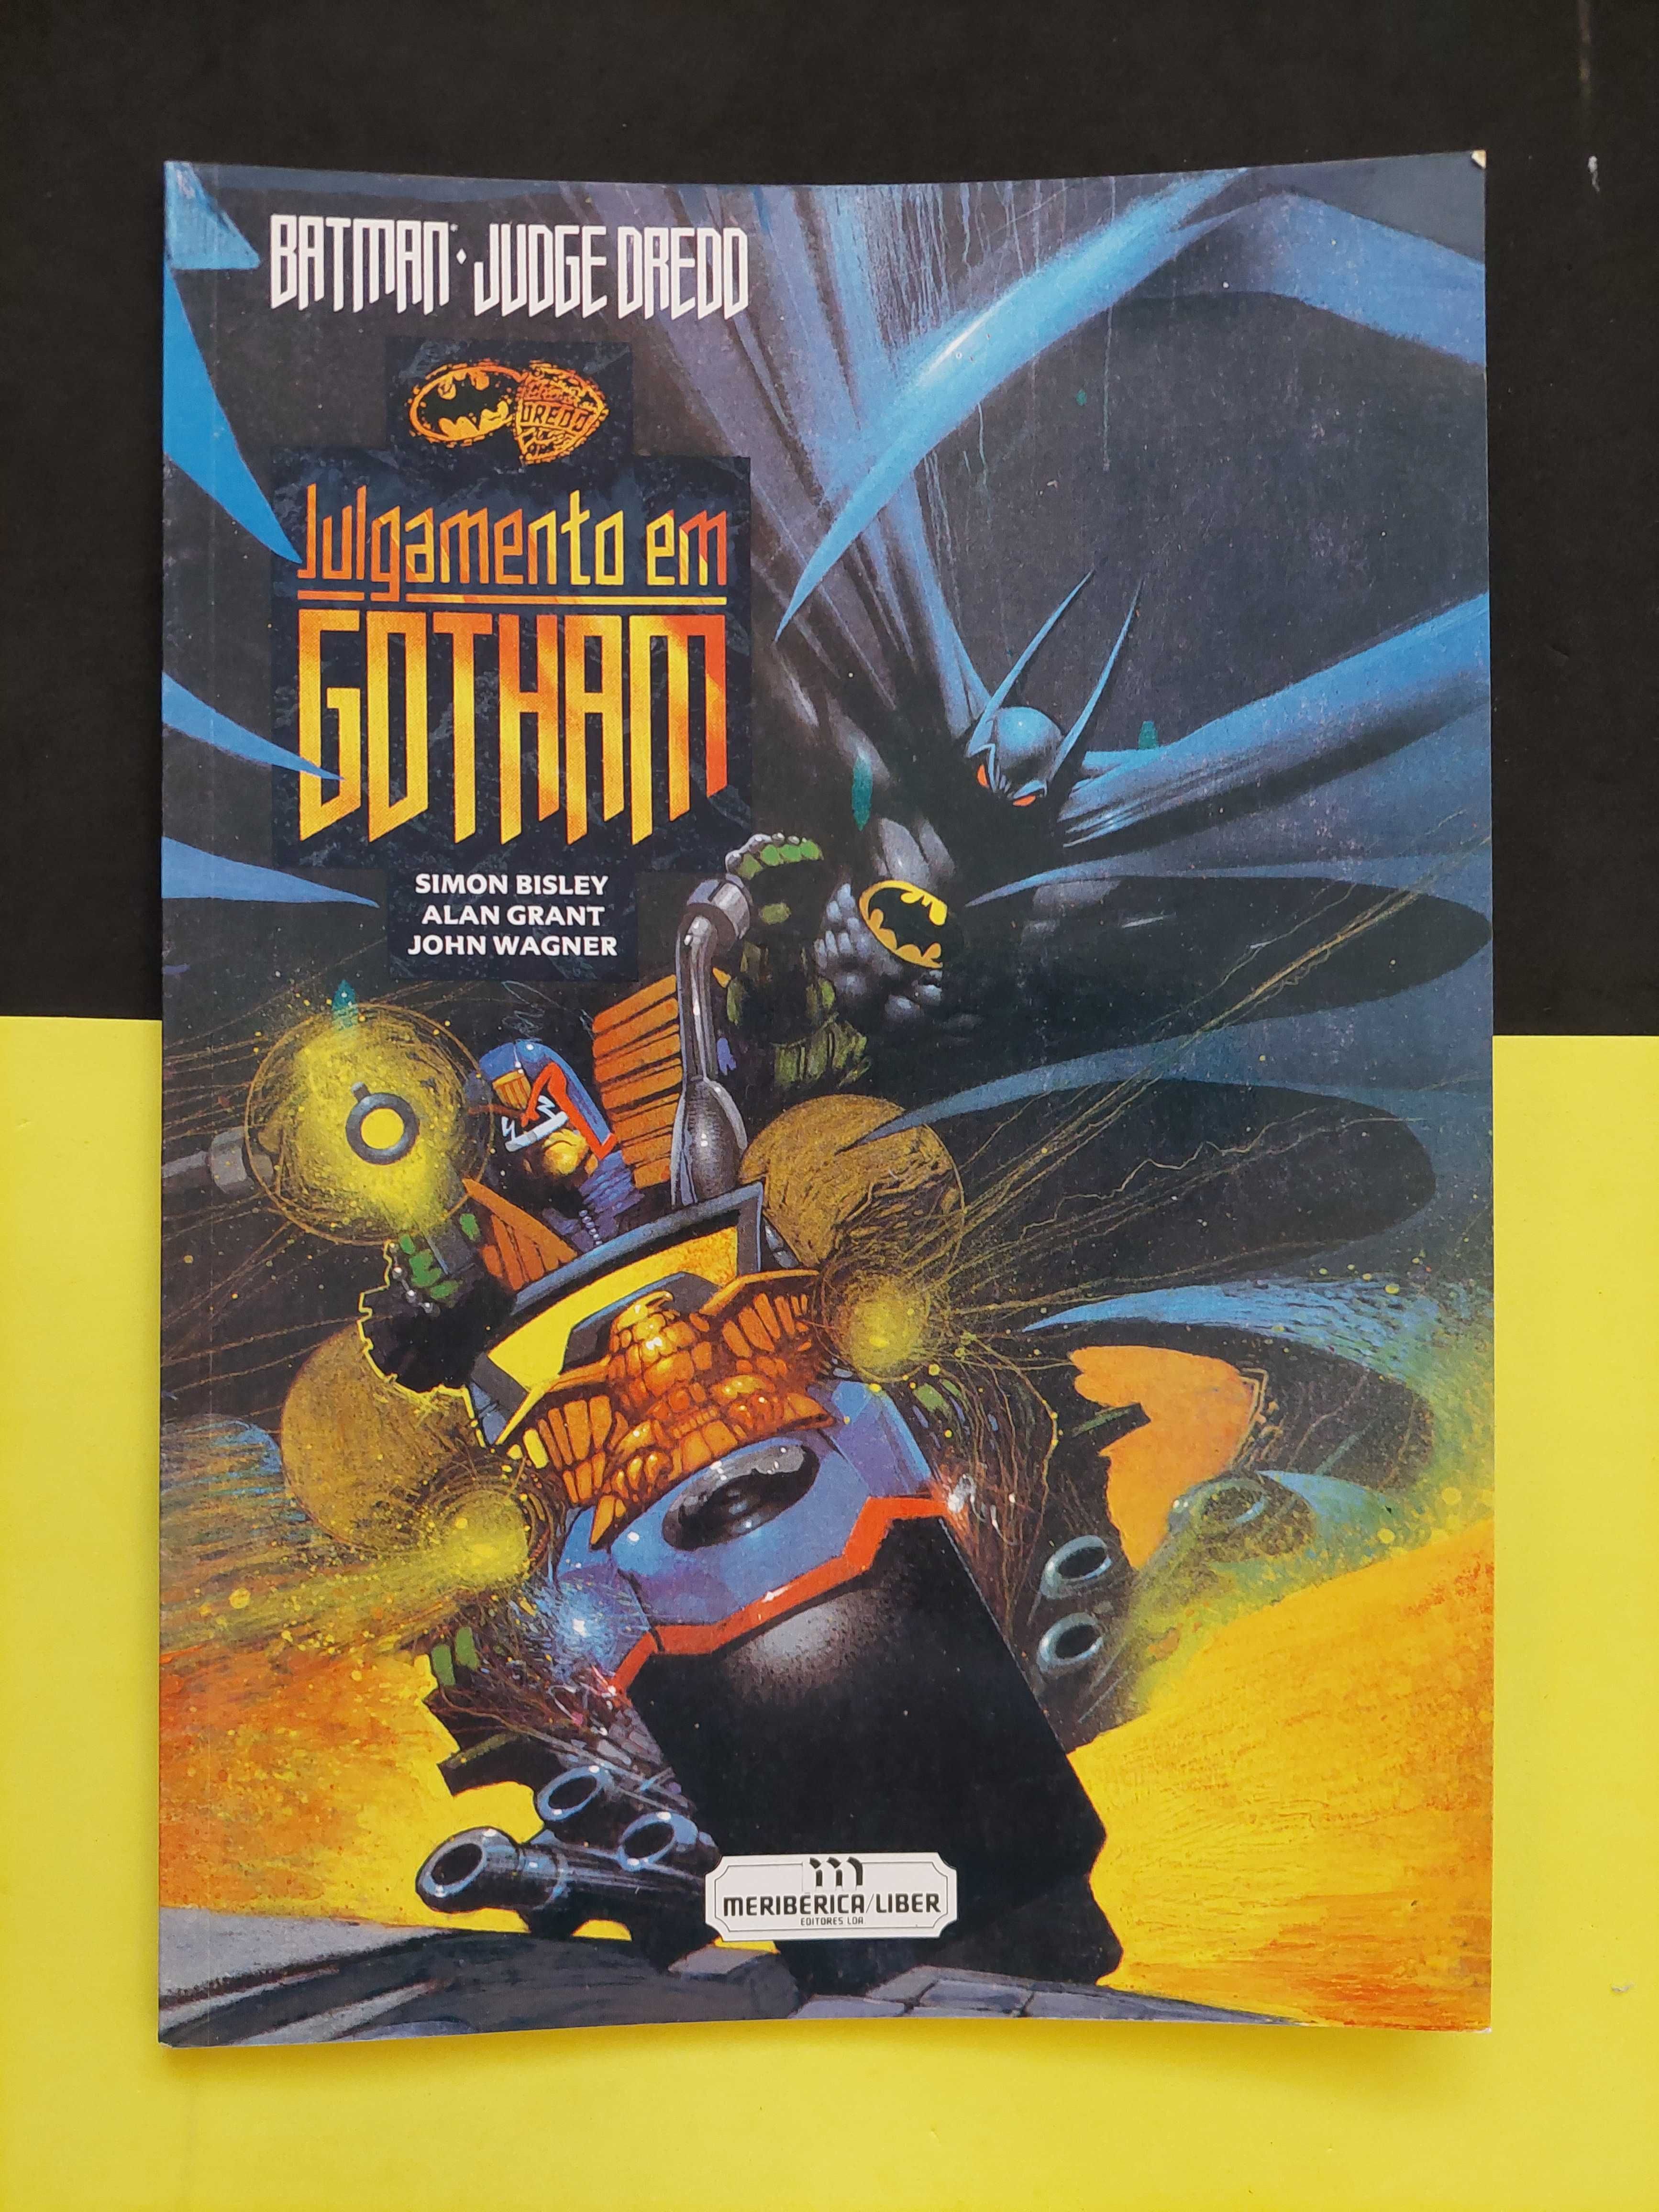 Simon Bisley, Alan Grant, John Wagner - Julgamento em Gotham. Batman